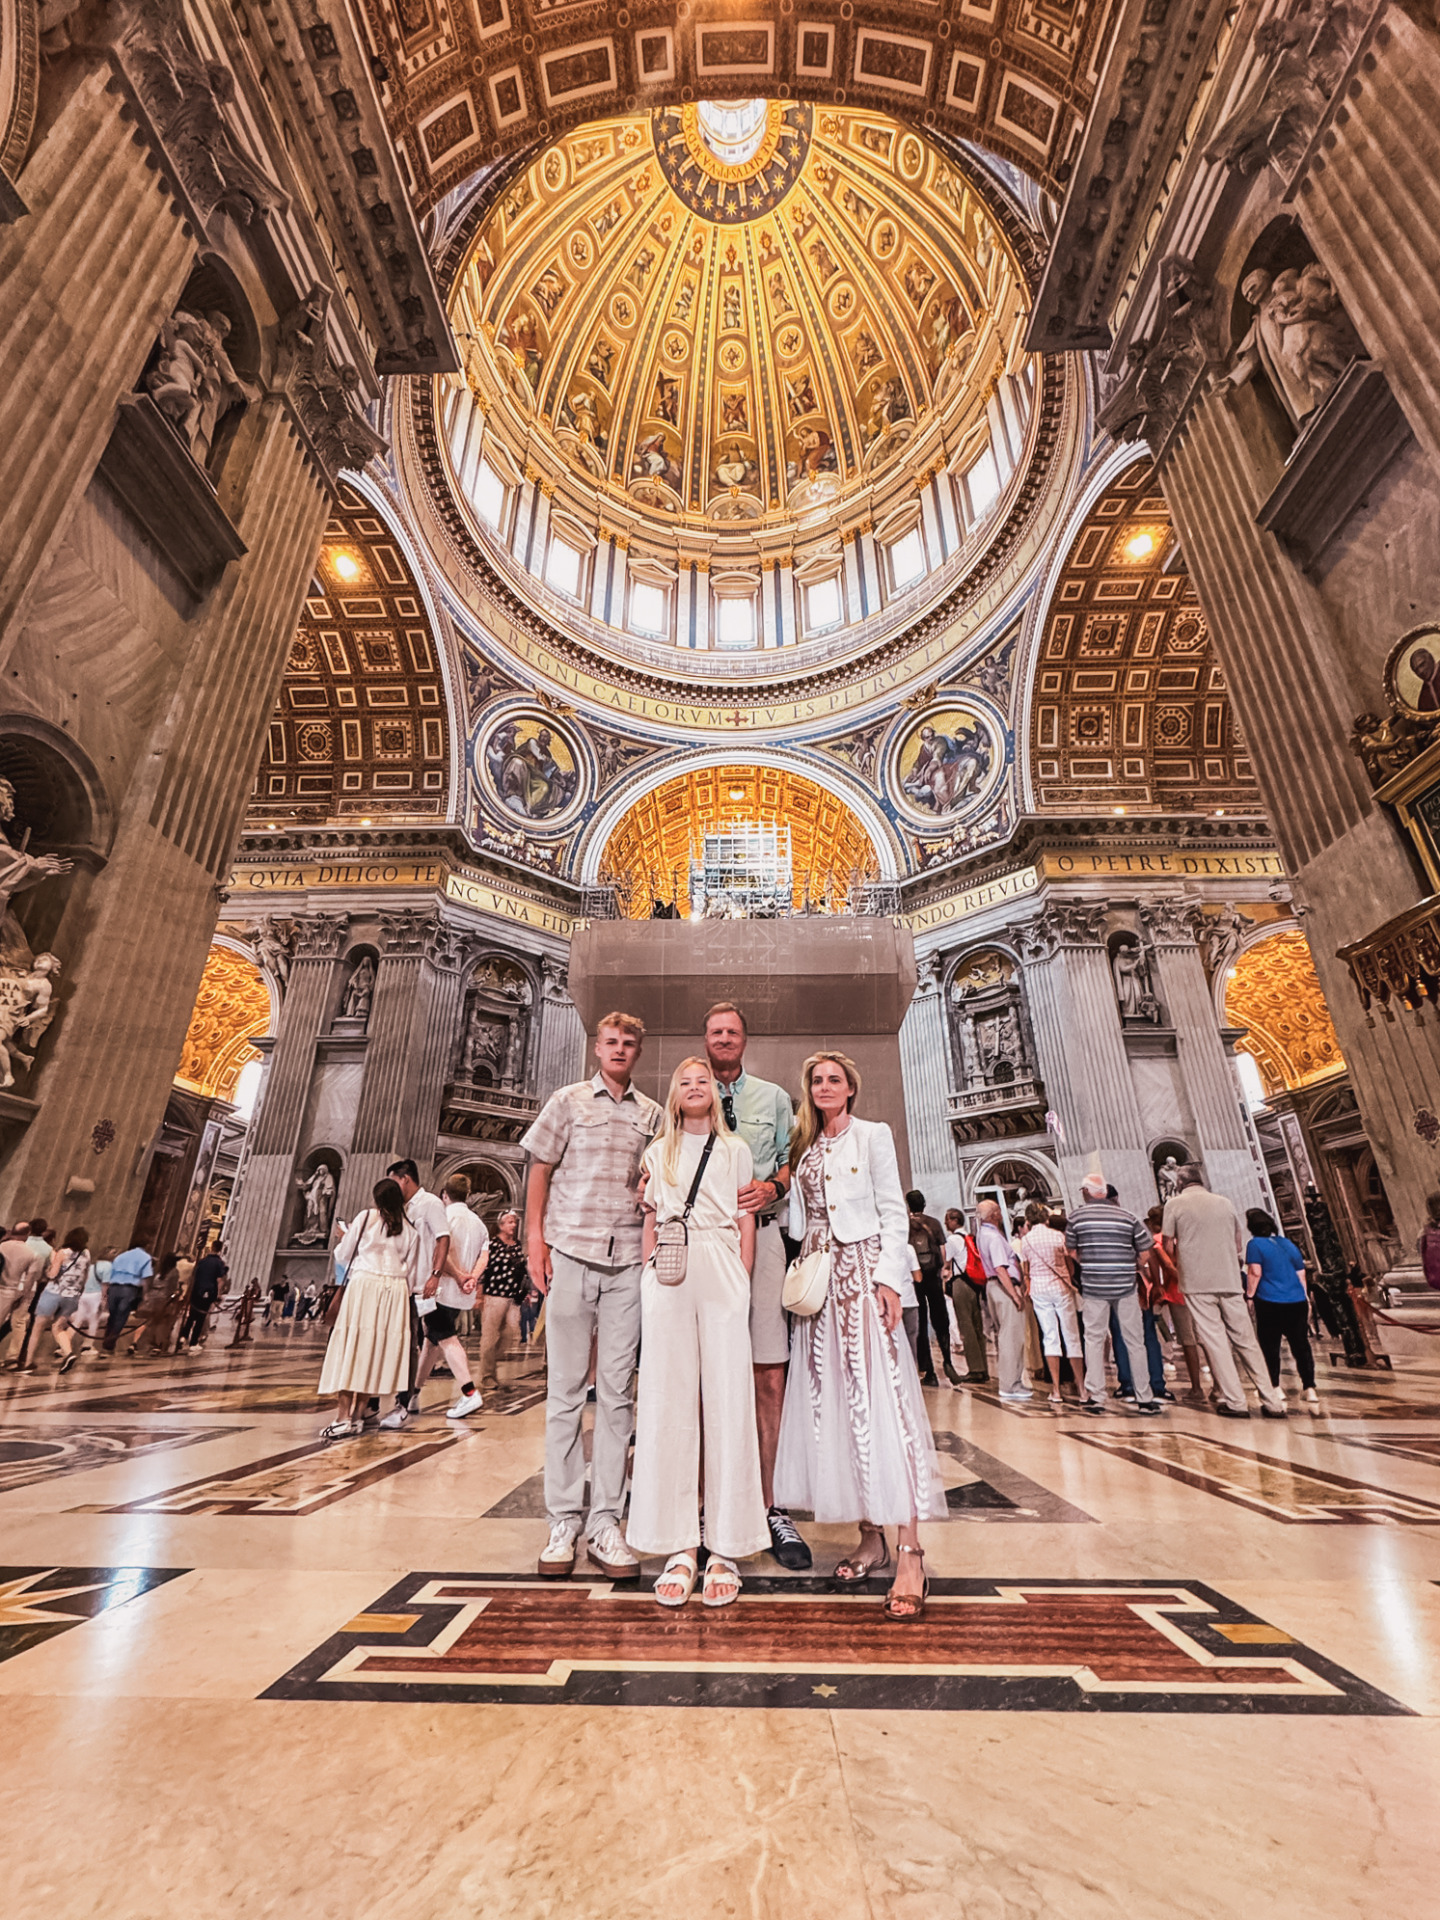 Vatican City travel guide